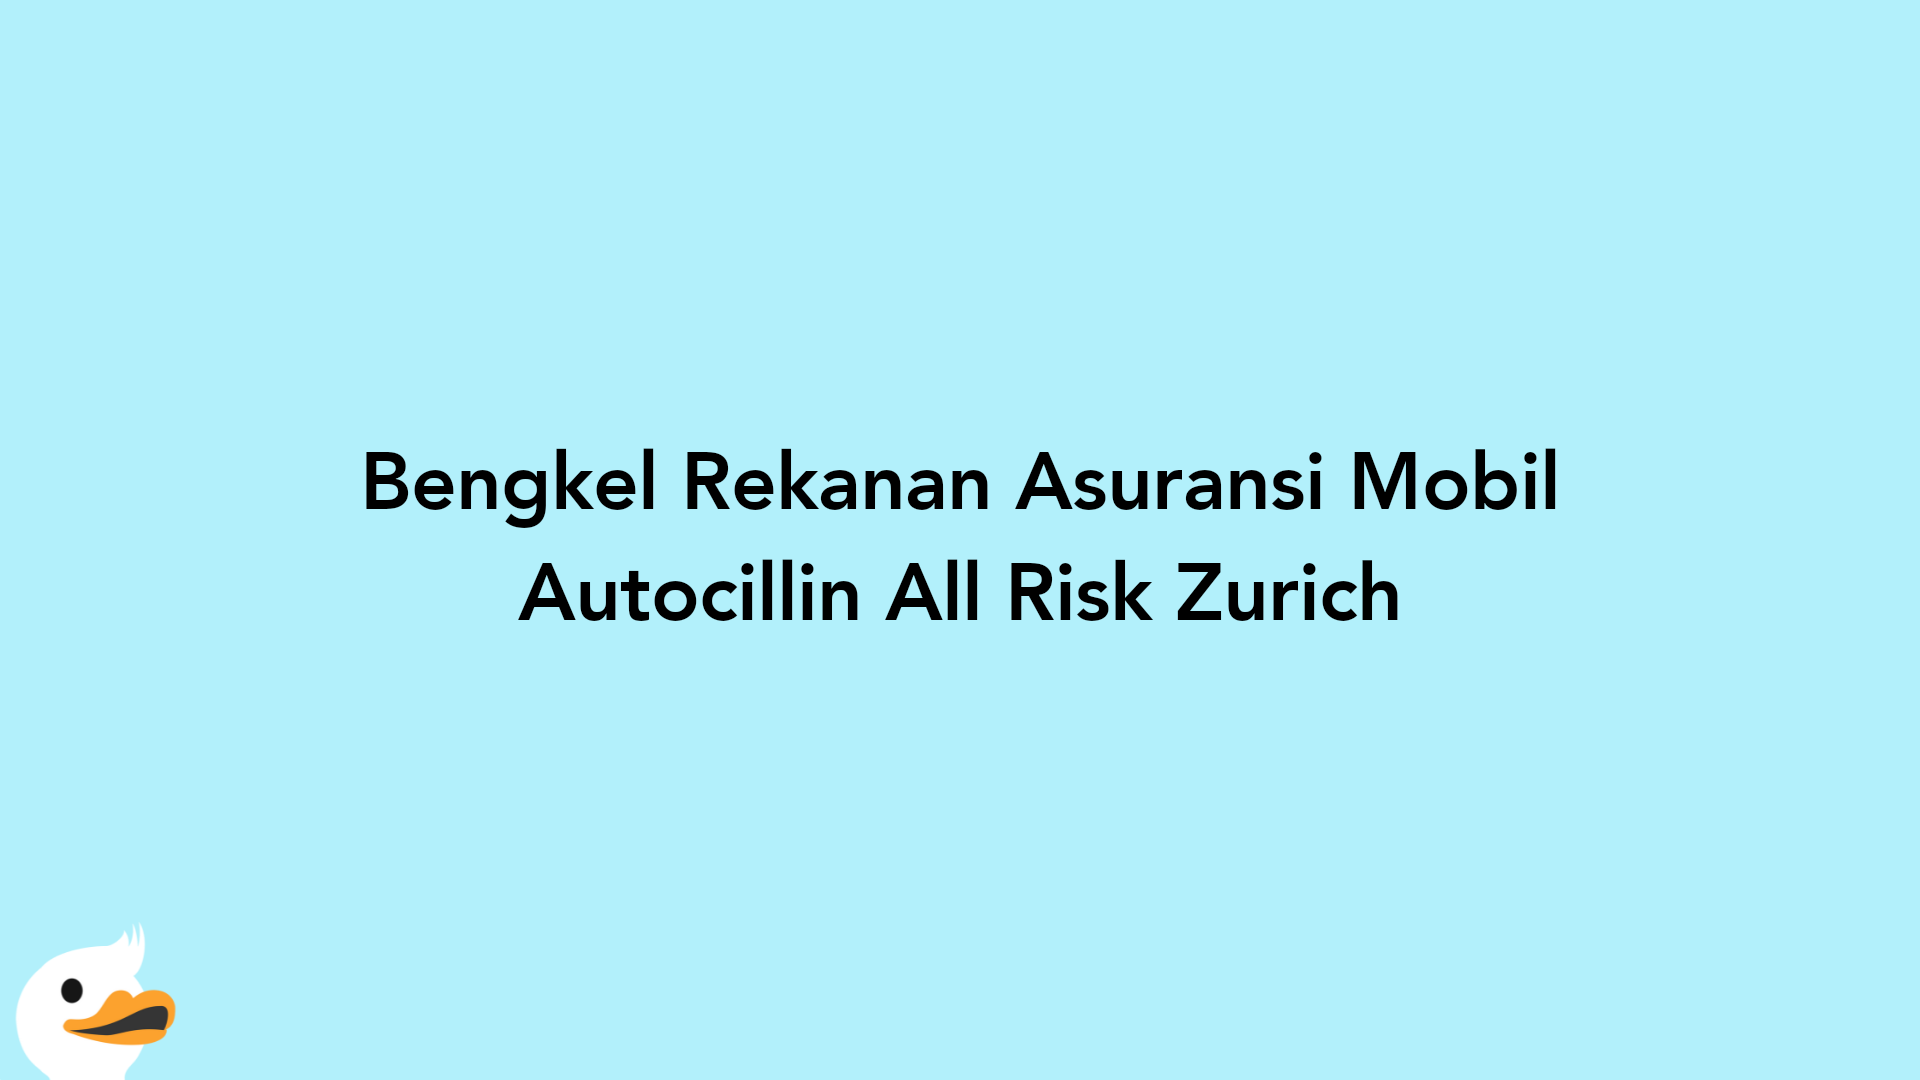 Bengkel Rekanan Asuransi Mobil Autocillin All Risk Zurich